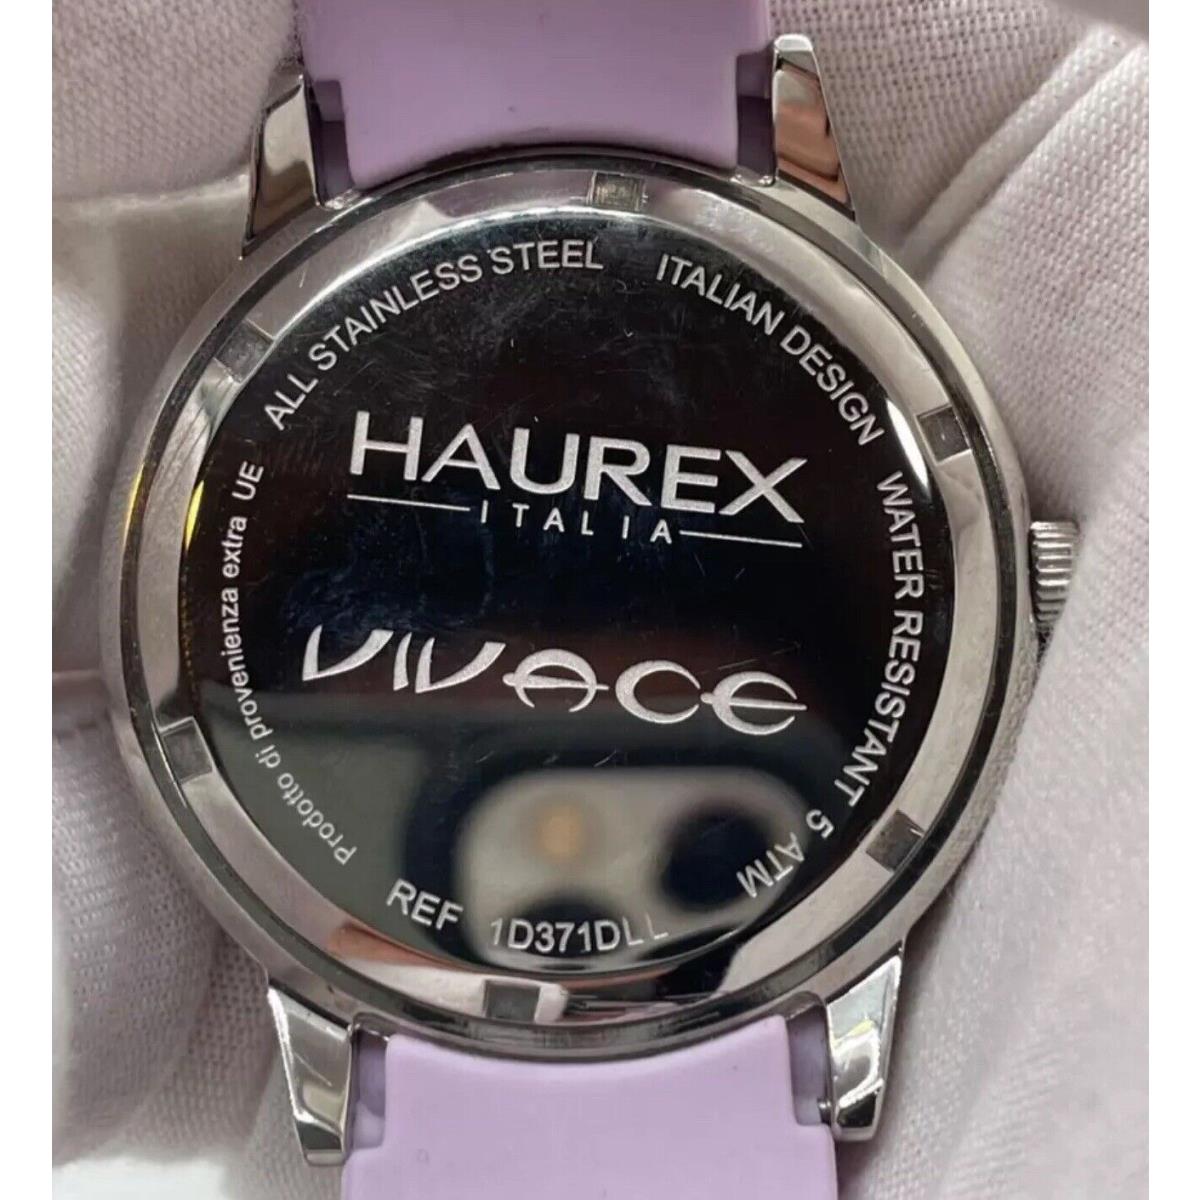 Haurex Haruex Italia Vivace Watch ID371DLL Purple Dial Band Silver Tone Case 50MWR